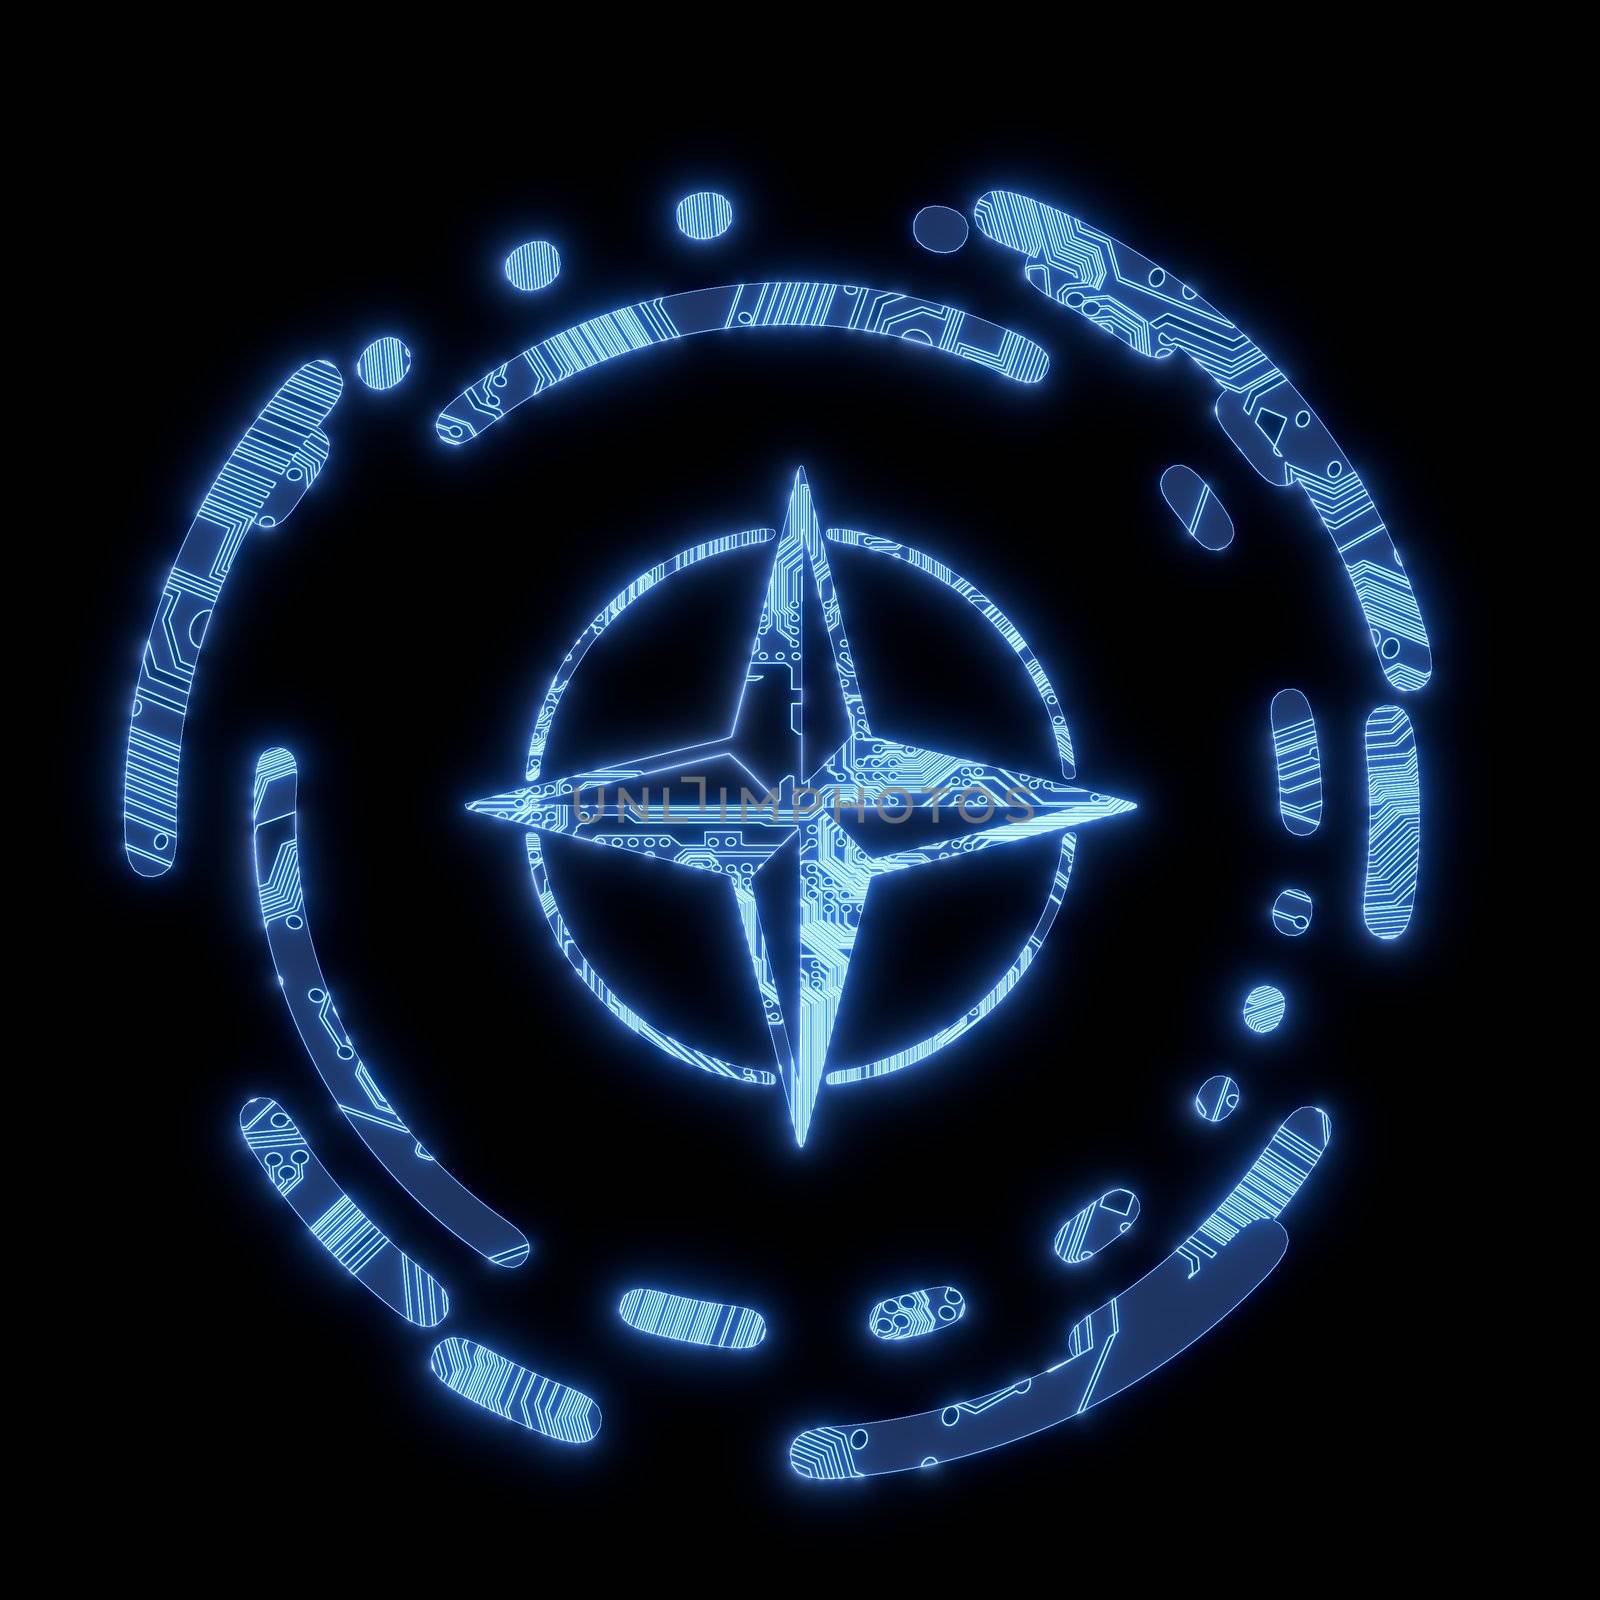 Illuminated blue electronic compass symbol  by onirb